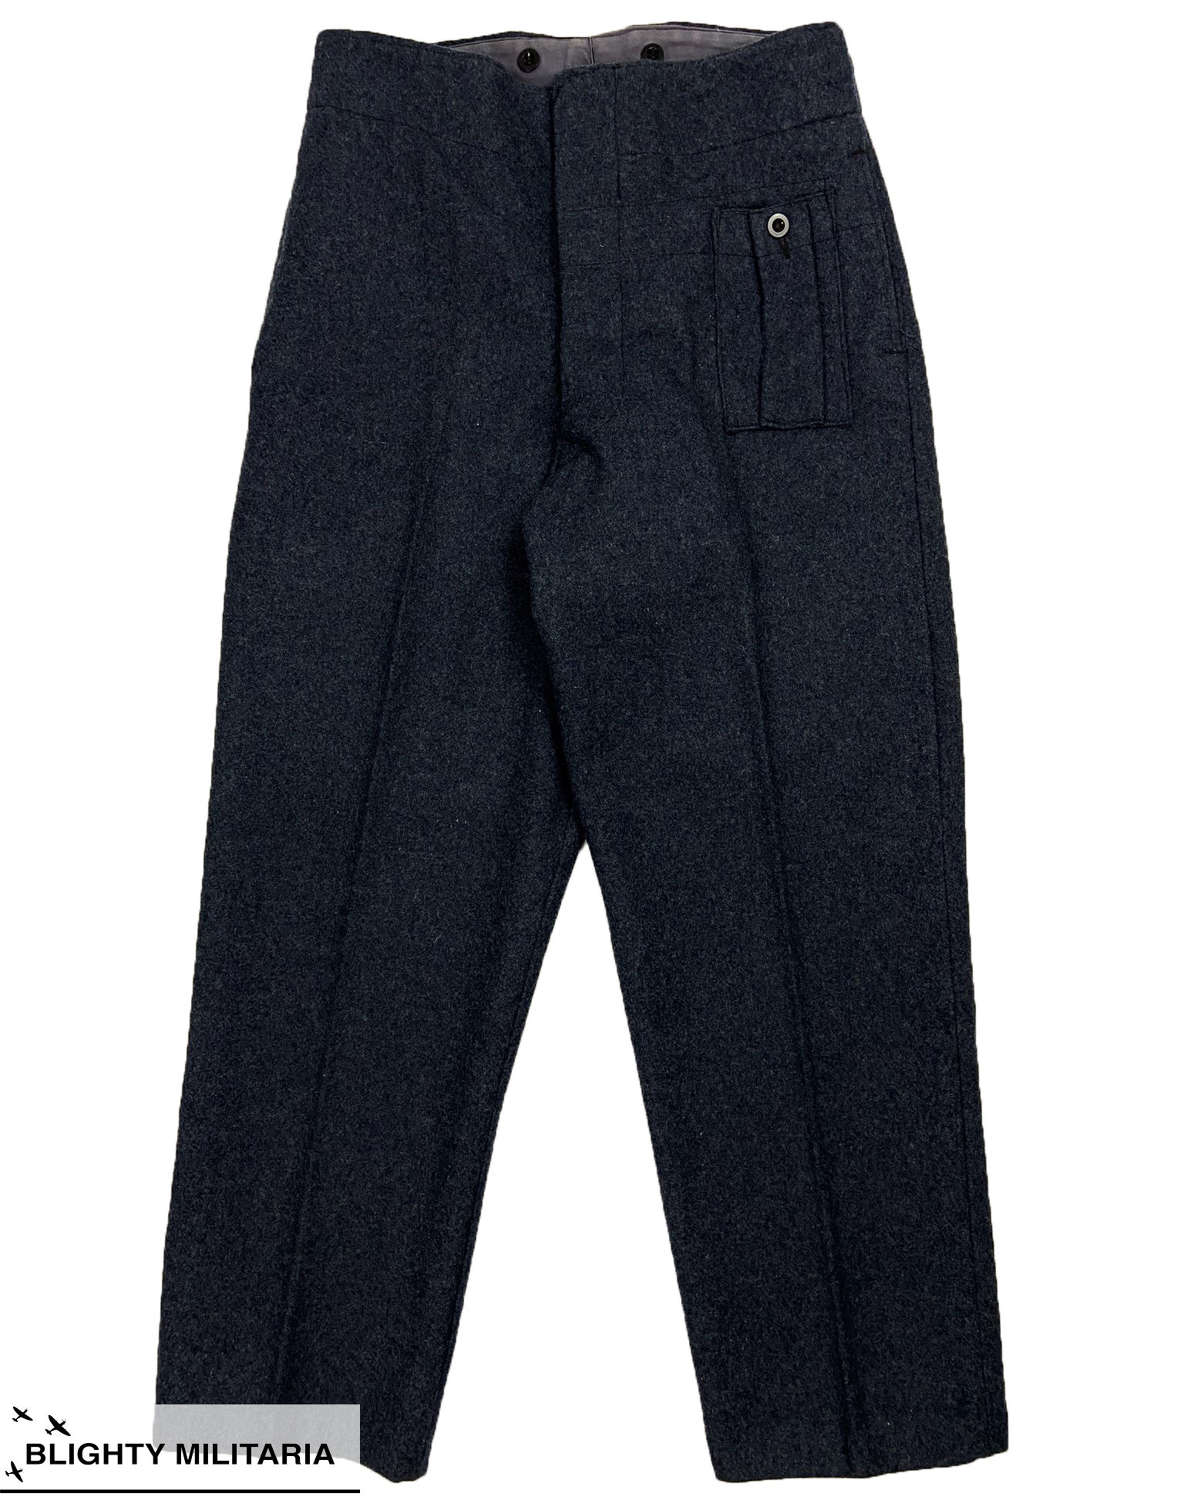 Original 1946 Dated RAF War Service Dress Trousers - Size 12